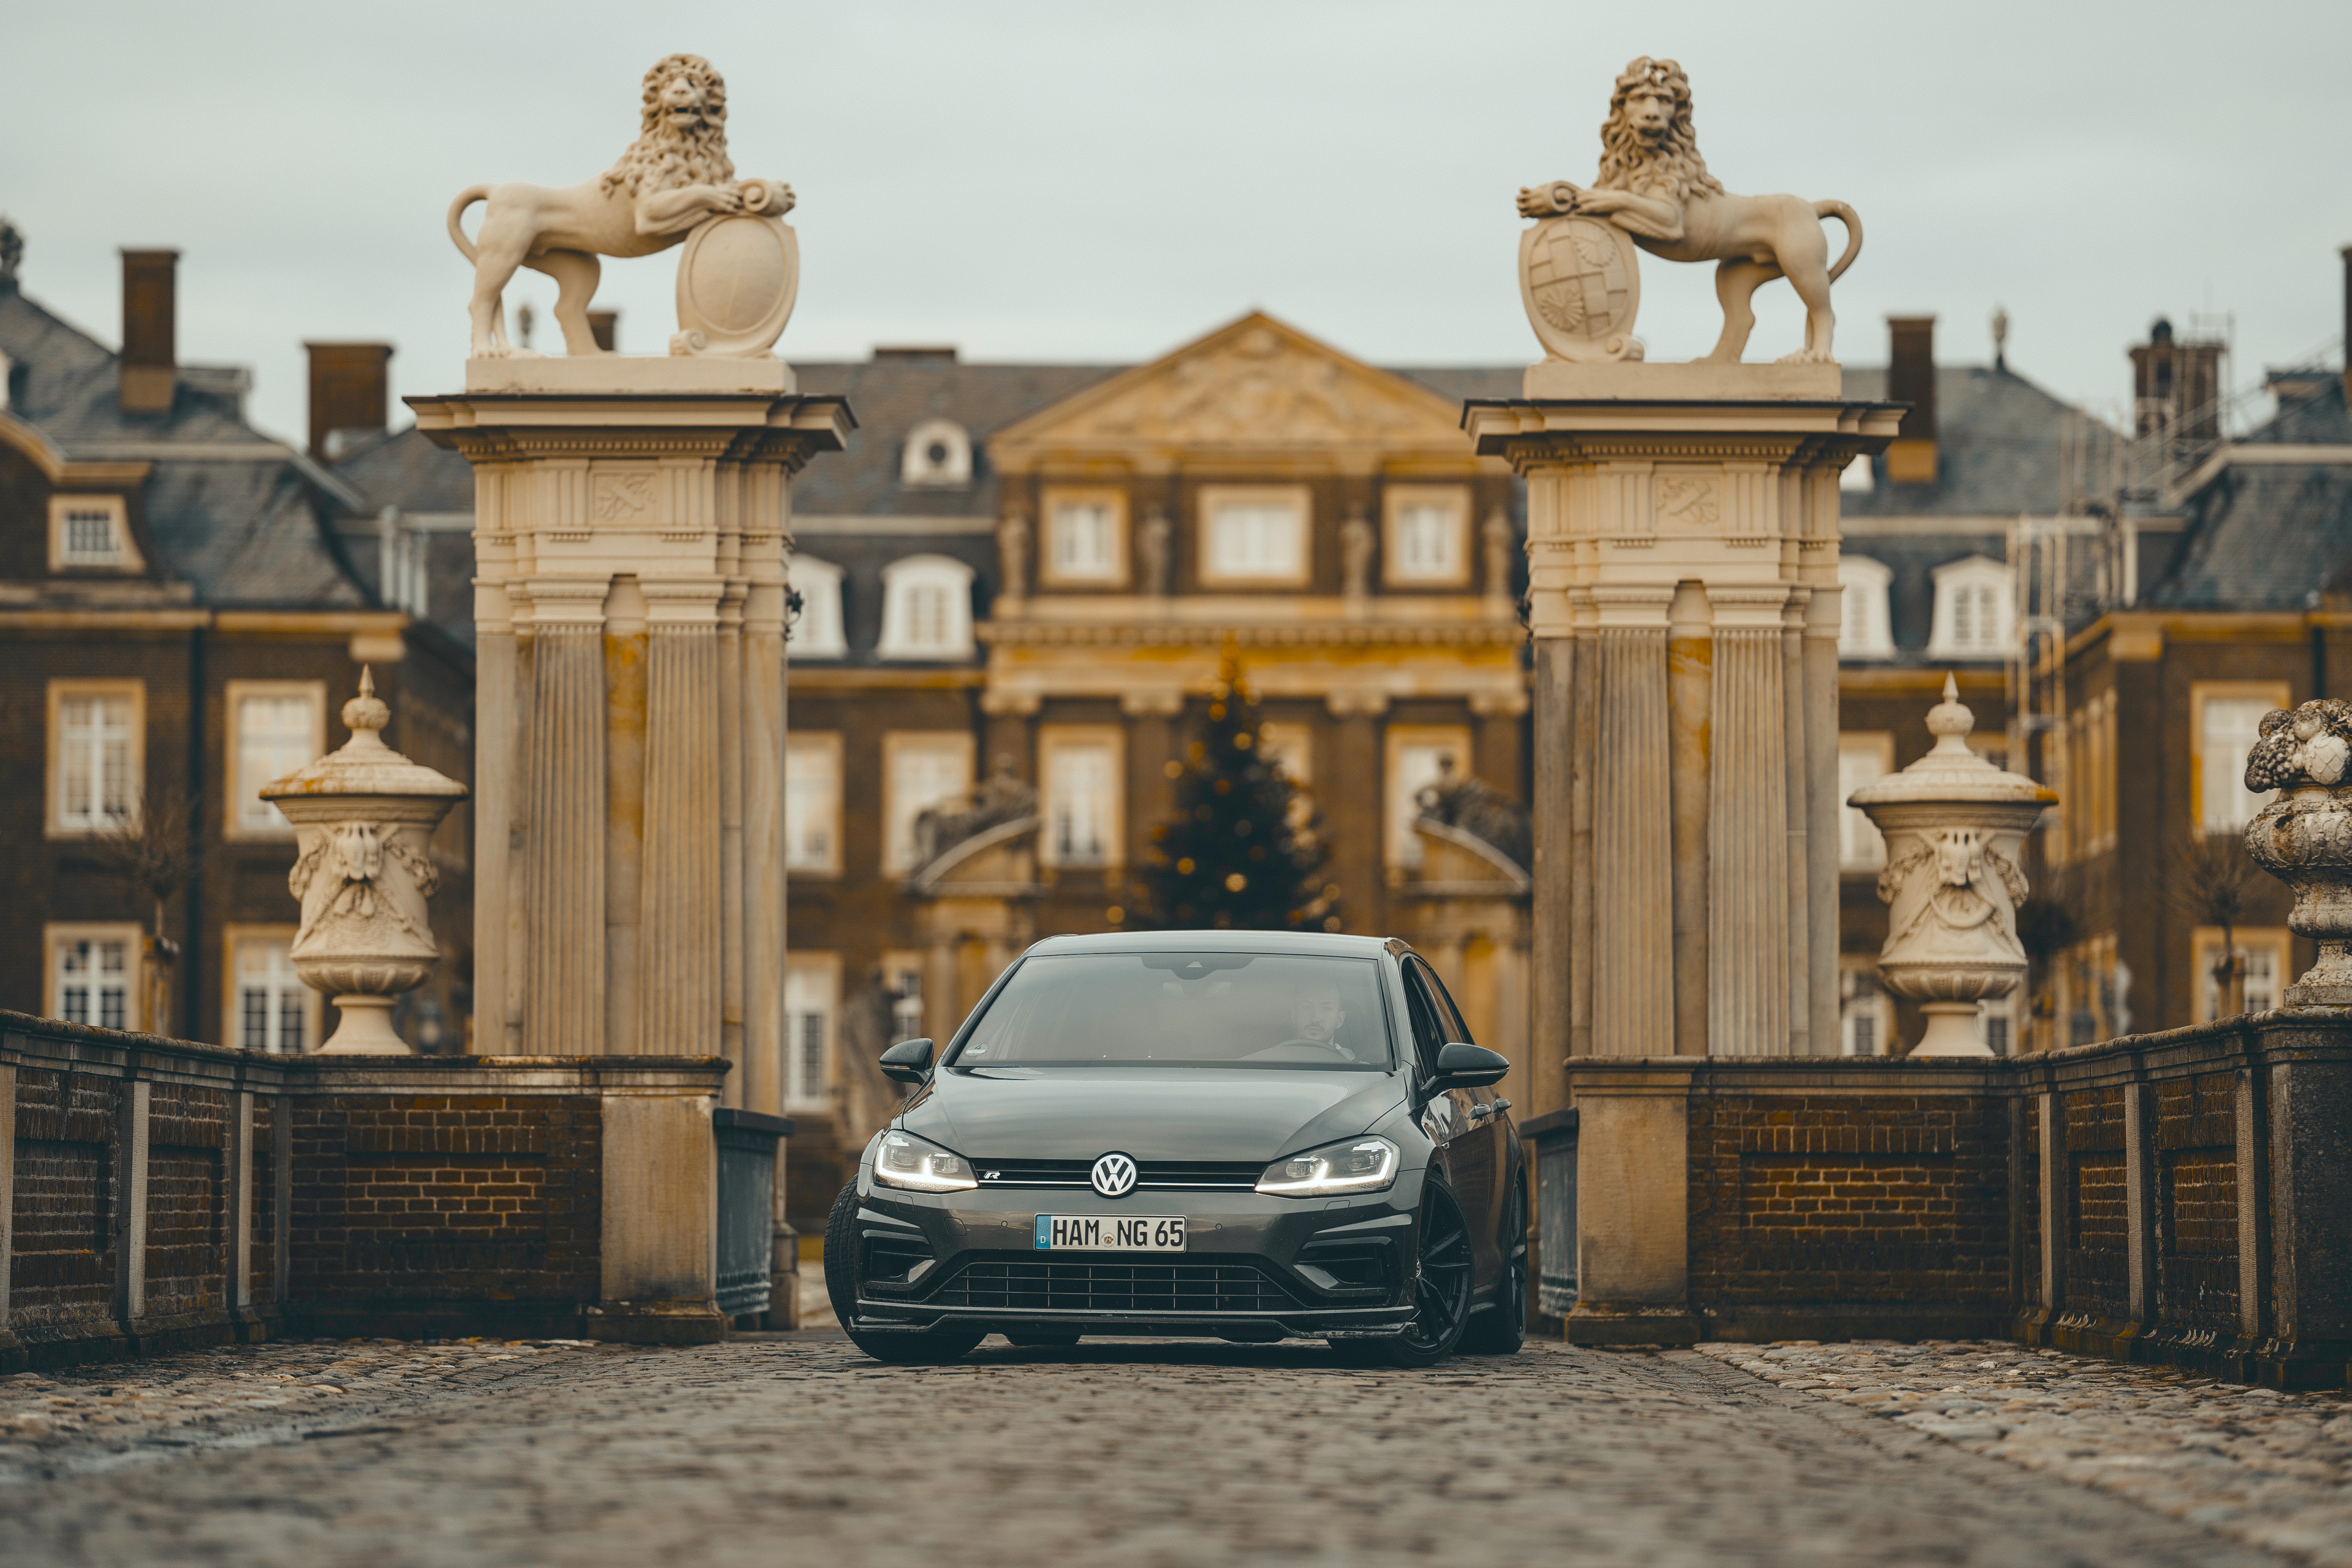 volkswagen, cars, car, grey, column, columns, palace Full HD